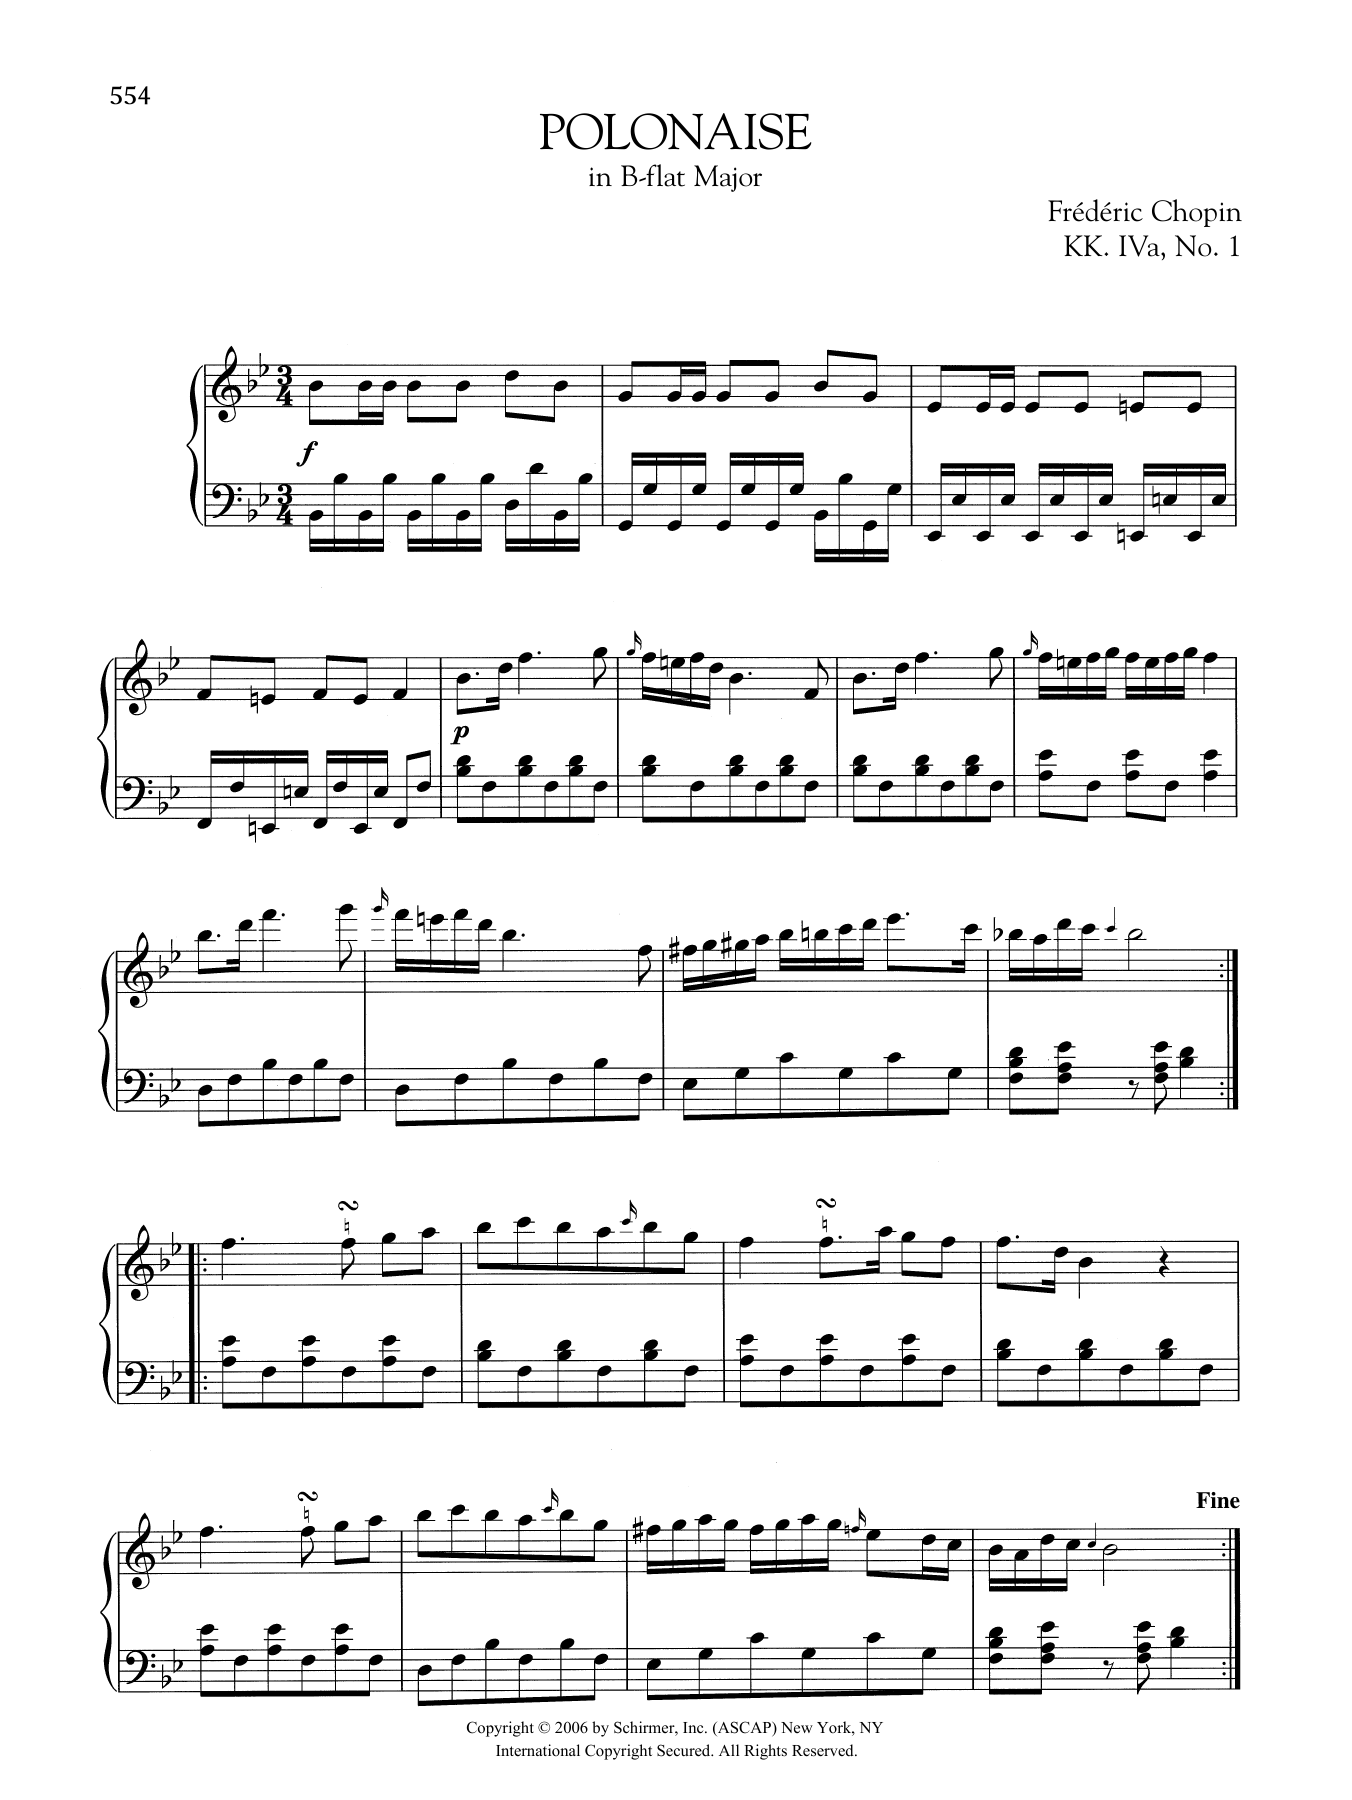 Download Frederic Chopin Polonaise in B-flat Major, KK. IVa, No. Sheet Music